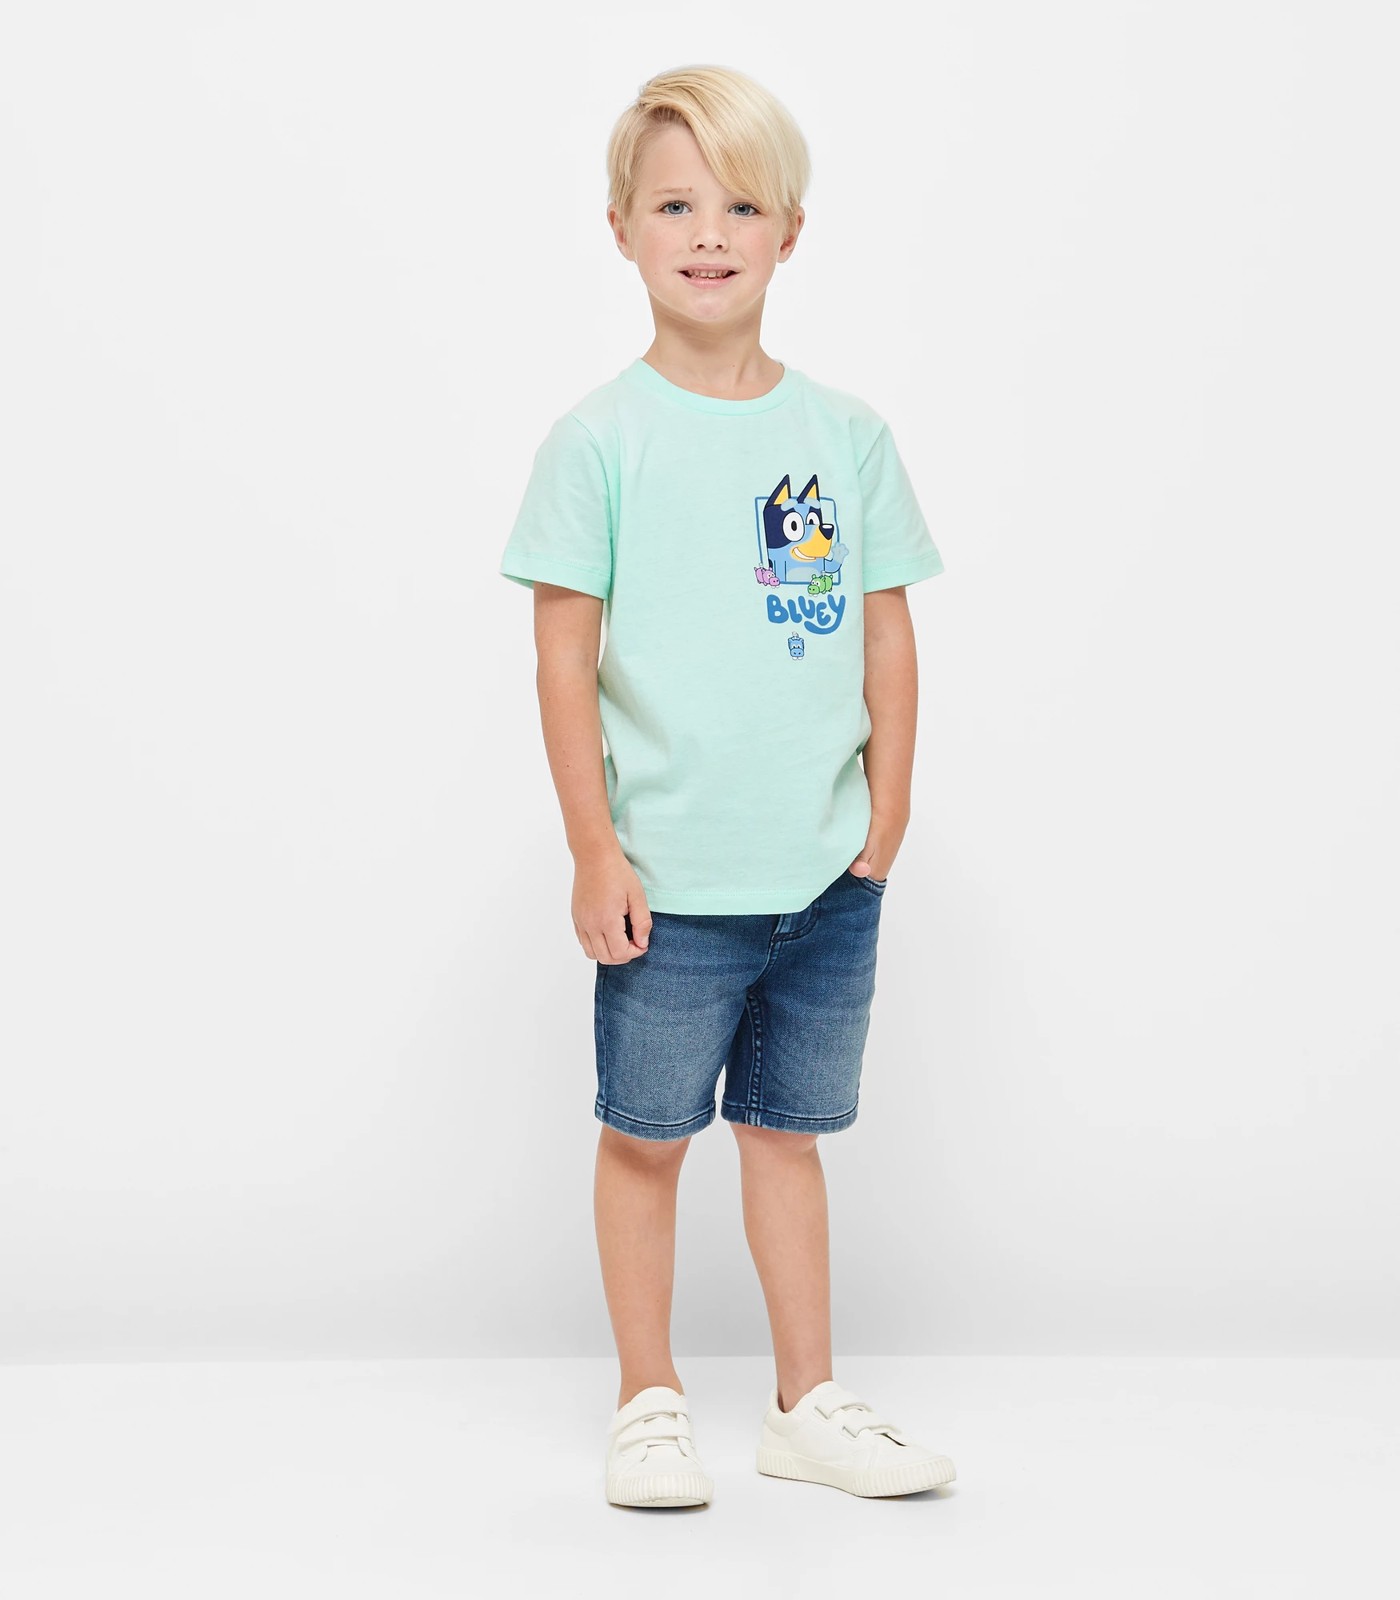 Bluey T-shirt | Target Australia